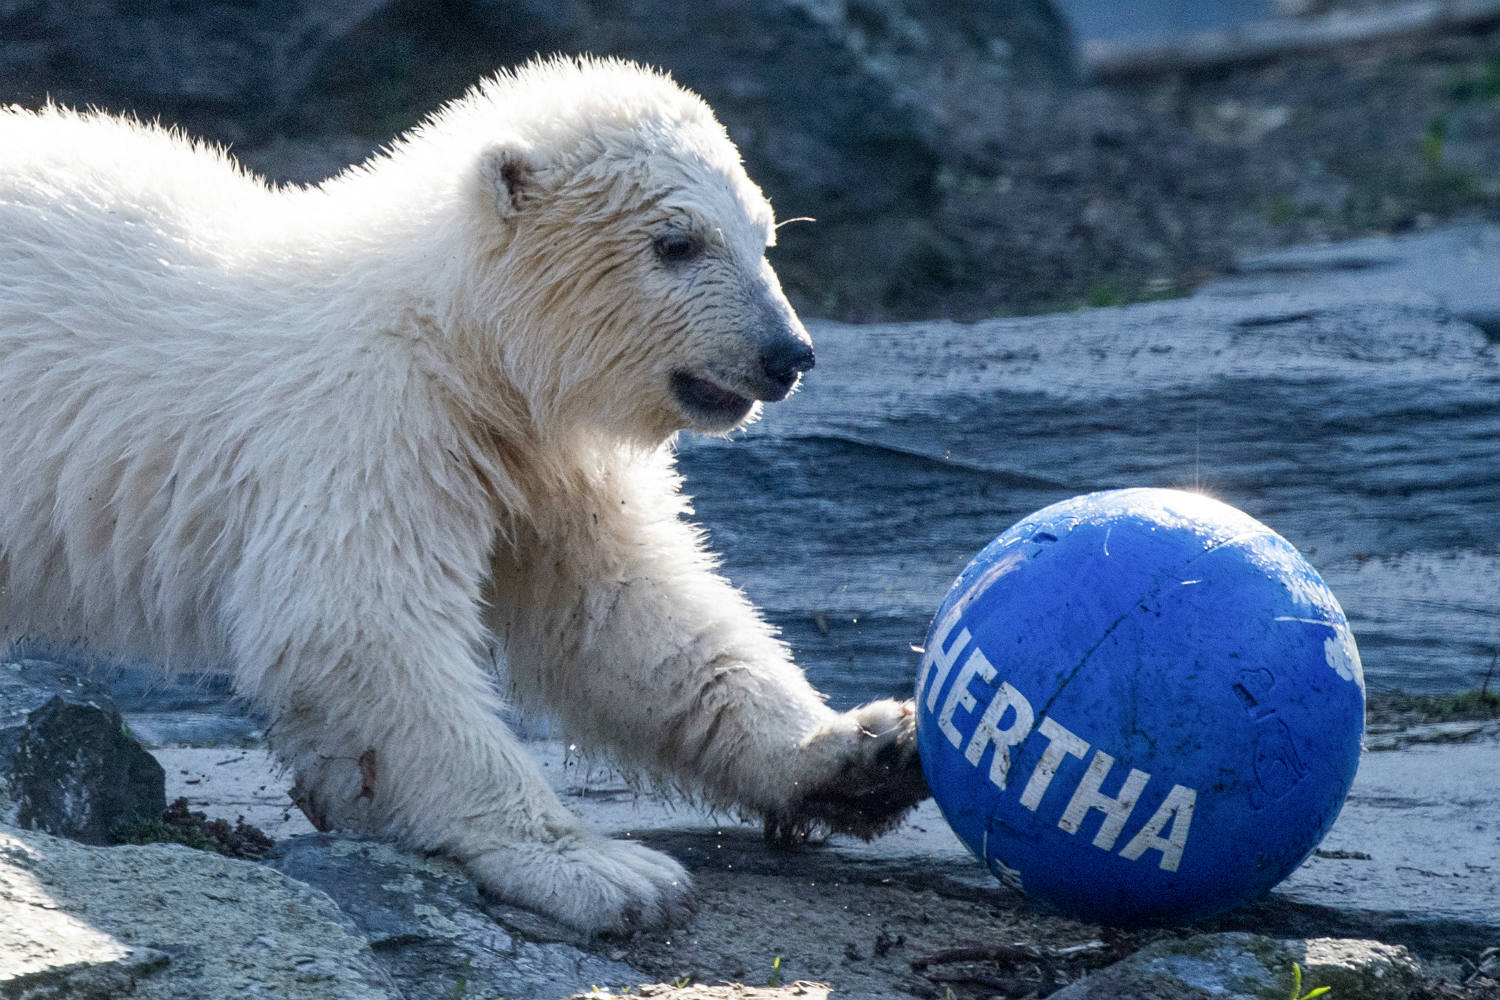 Hertha:Η πολική αρκούδα που υιοθέτησε η ποδοσφαιρική ομάδα του Βερολίνου